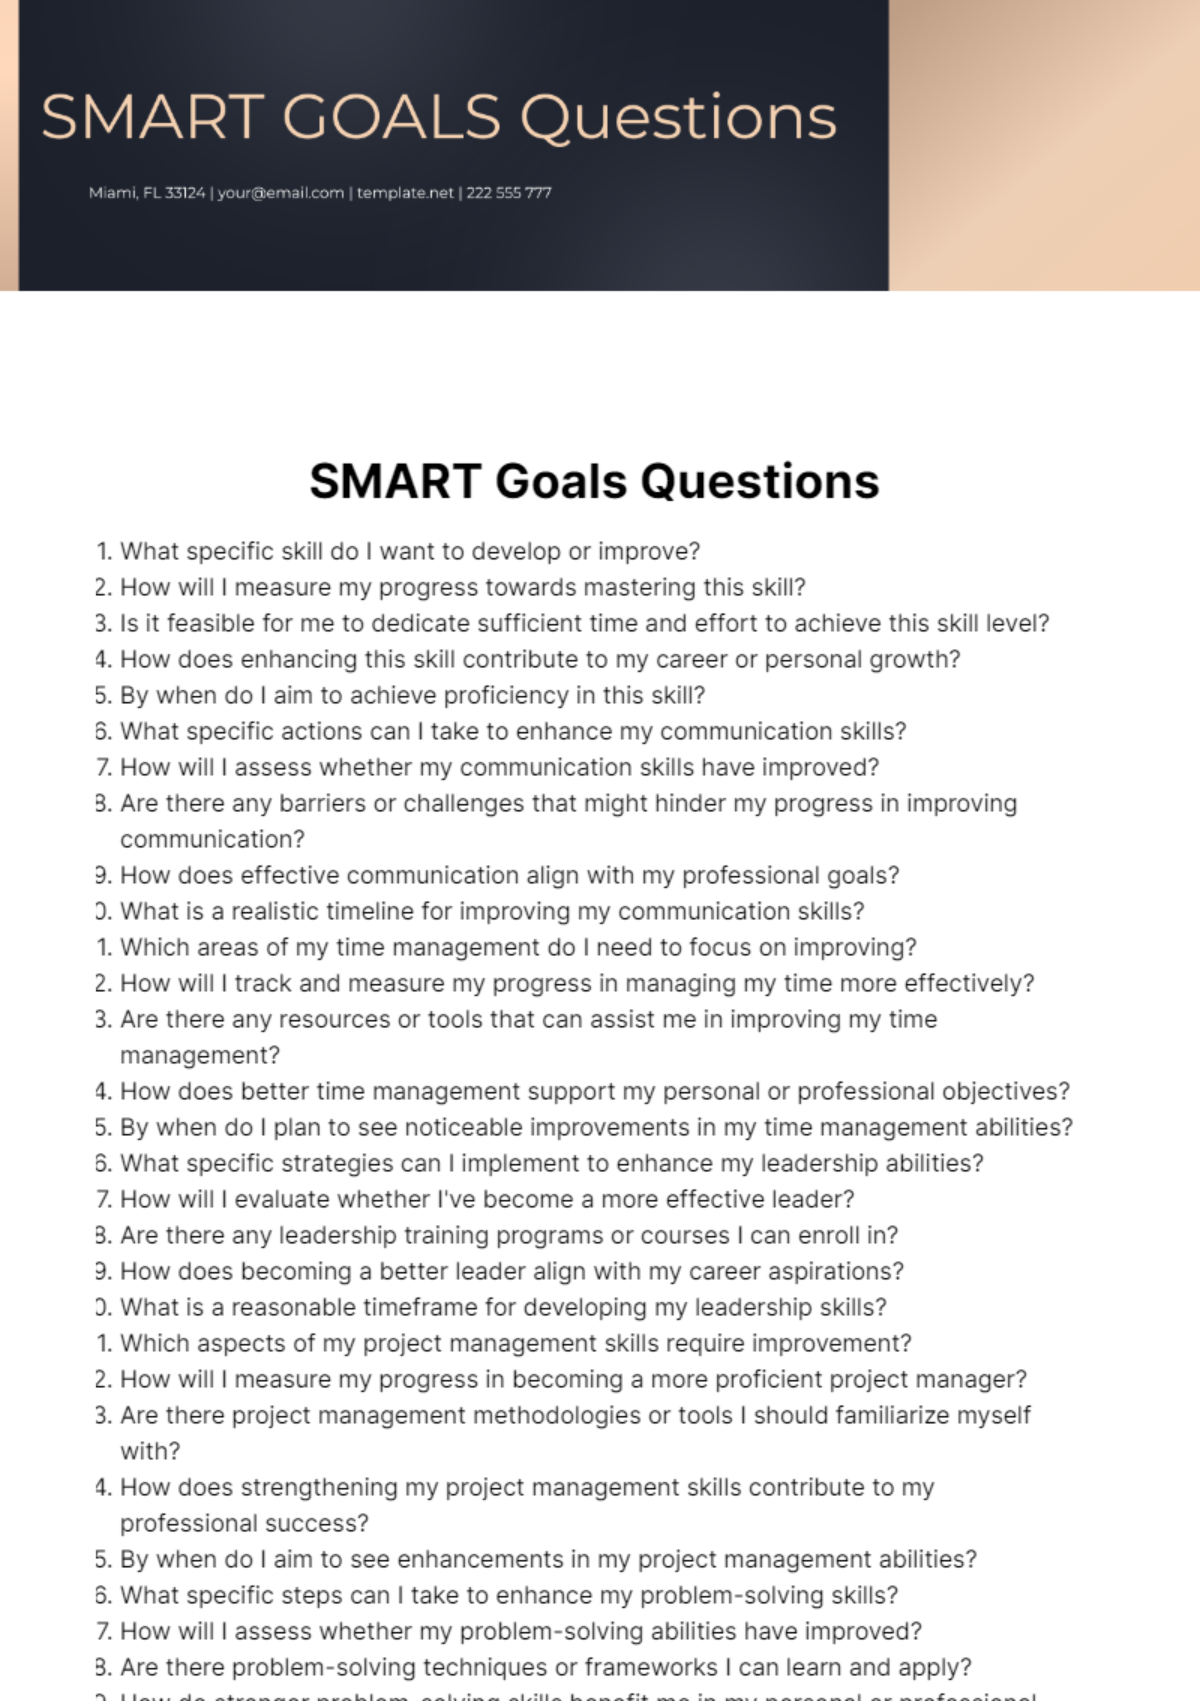 SMART Goals Questions Template